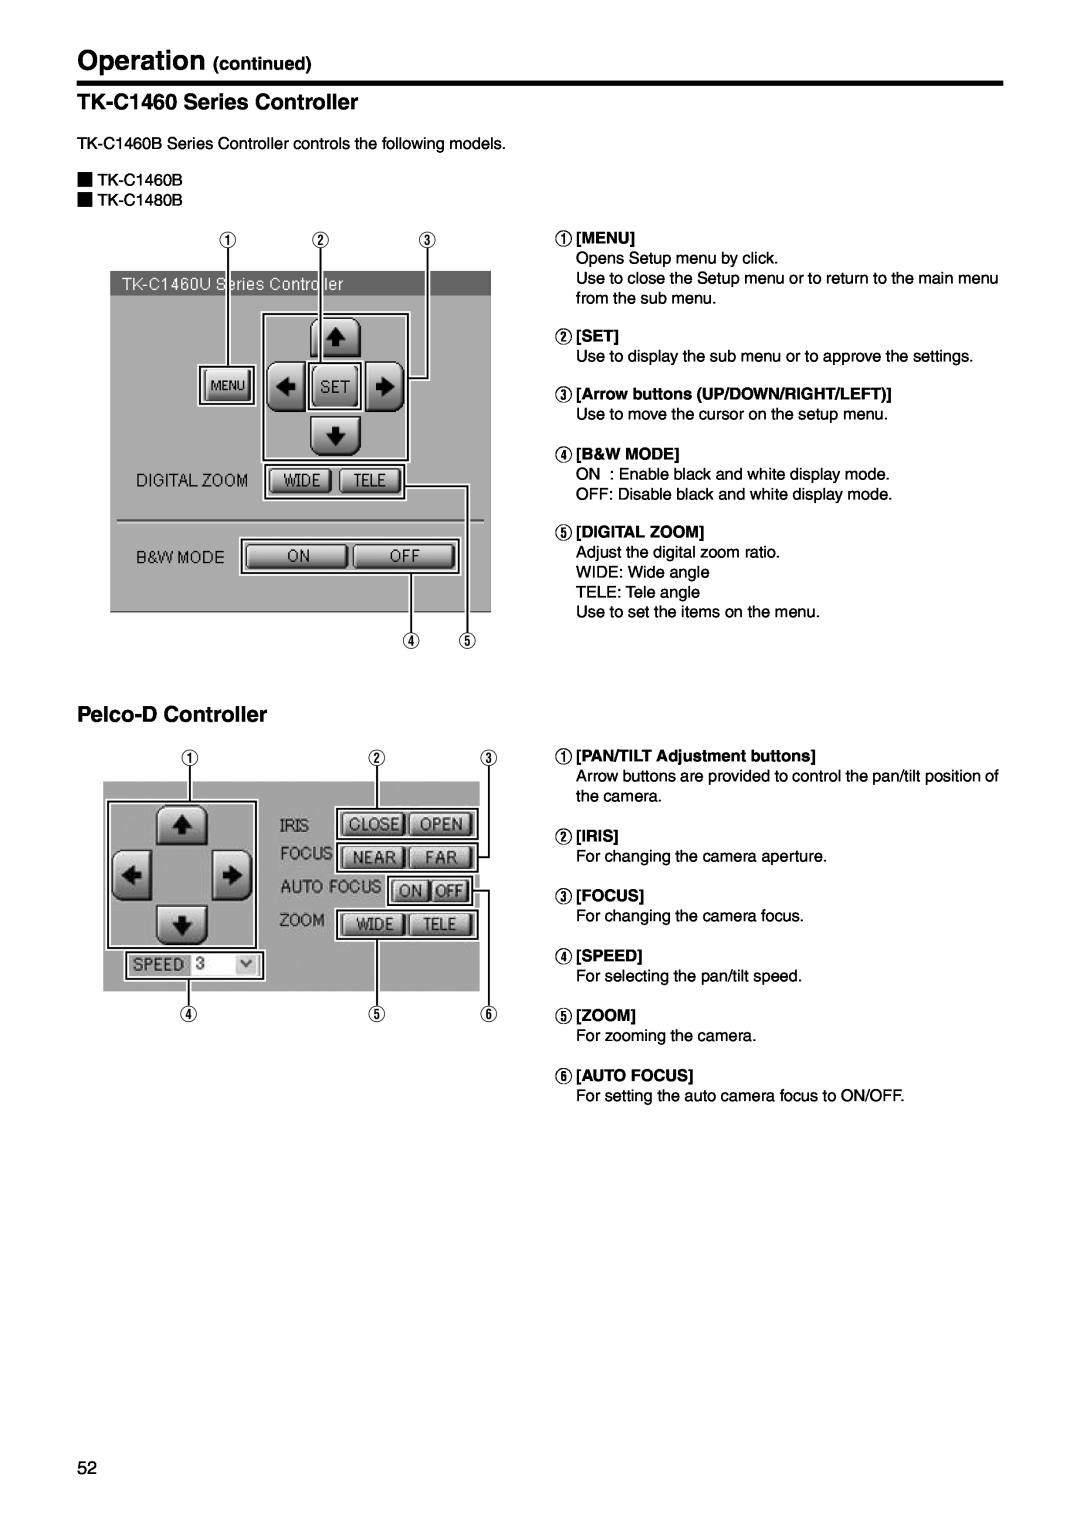 JVC VN-E4 manual TK-C1460 Series Controller, Pelco-D Controller, A Menu, B Set, D B&W Mode, E Digital Zoom, B Iris, C Focus 